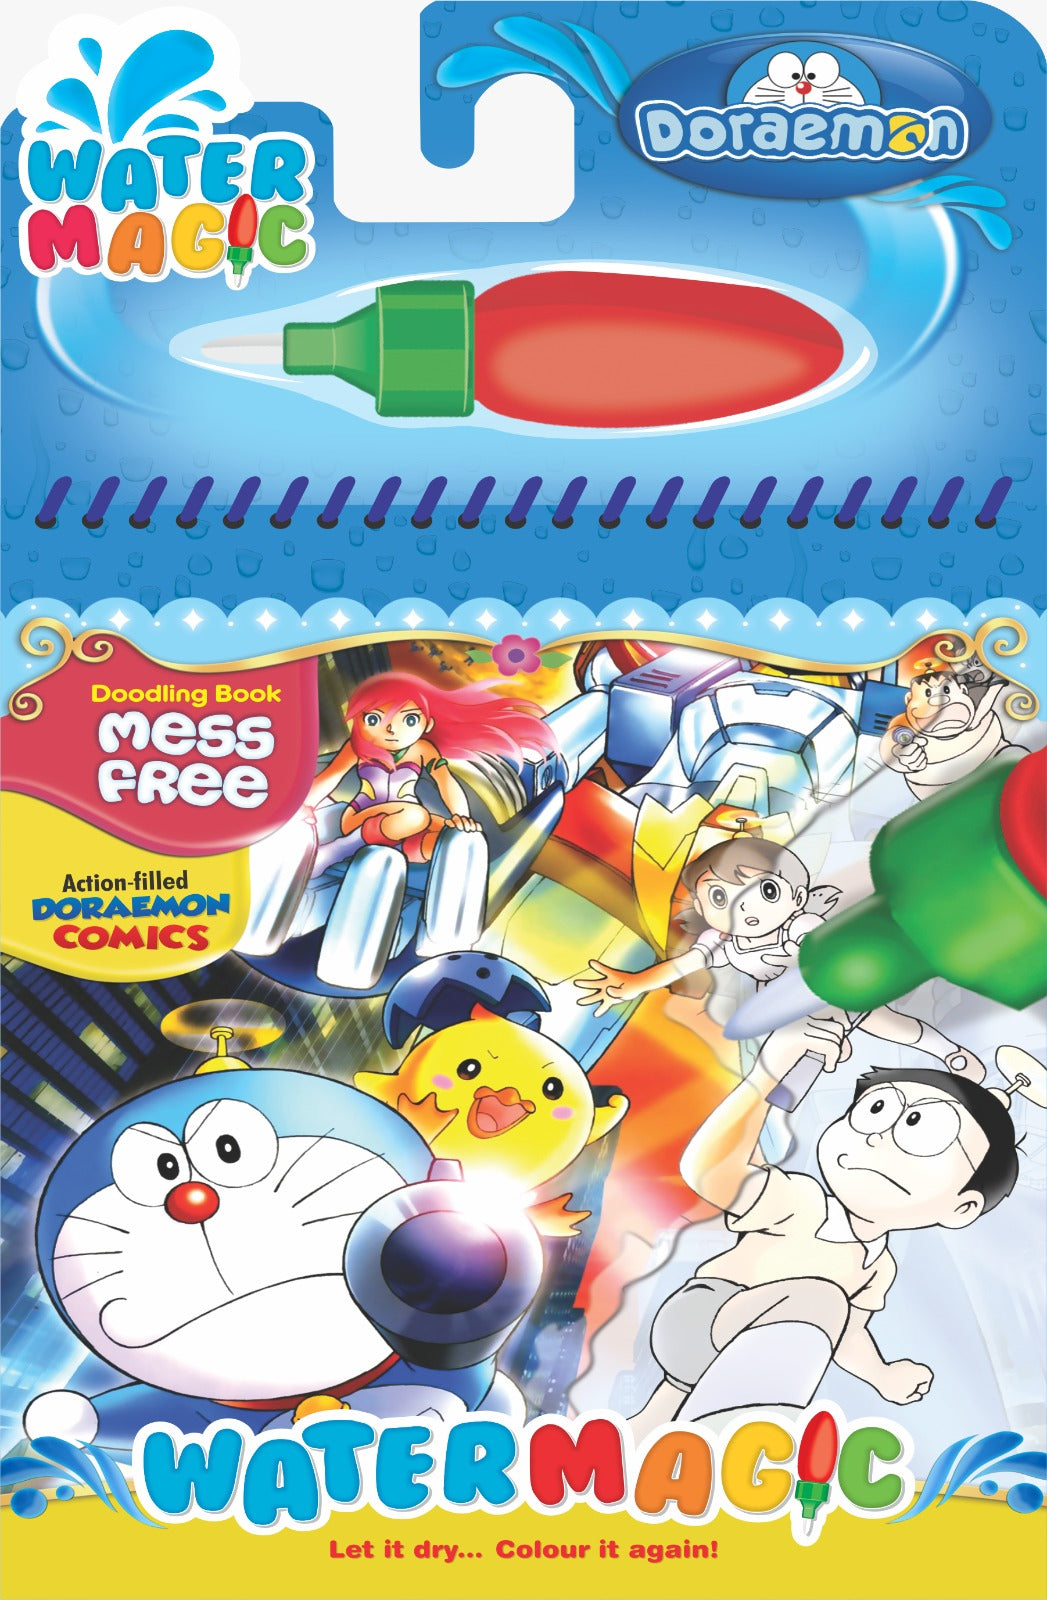 Water Magic Book Doraemon 875